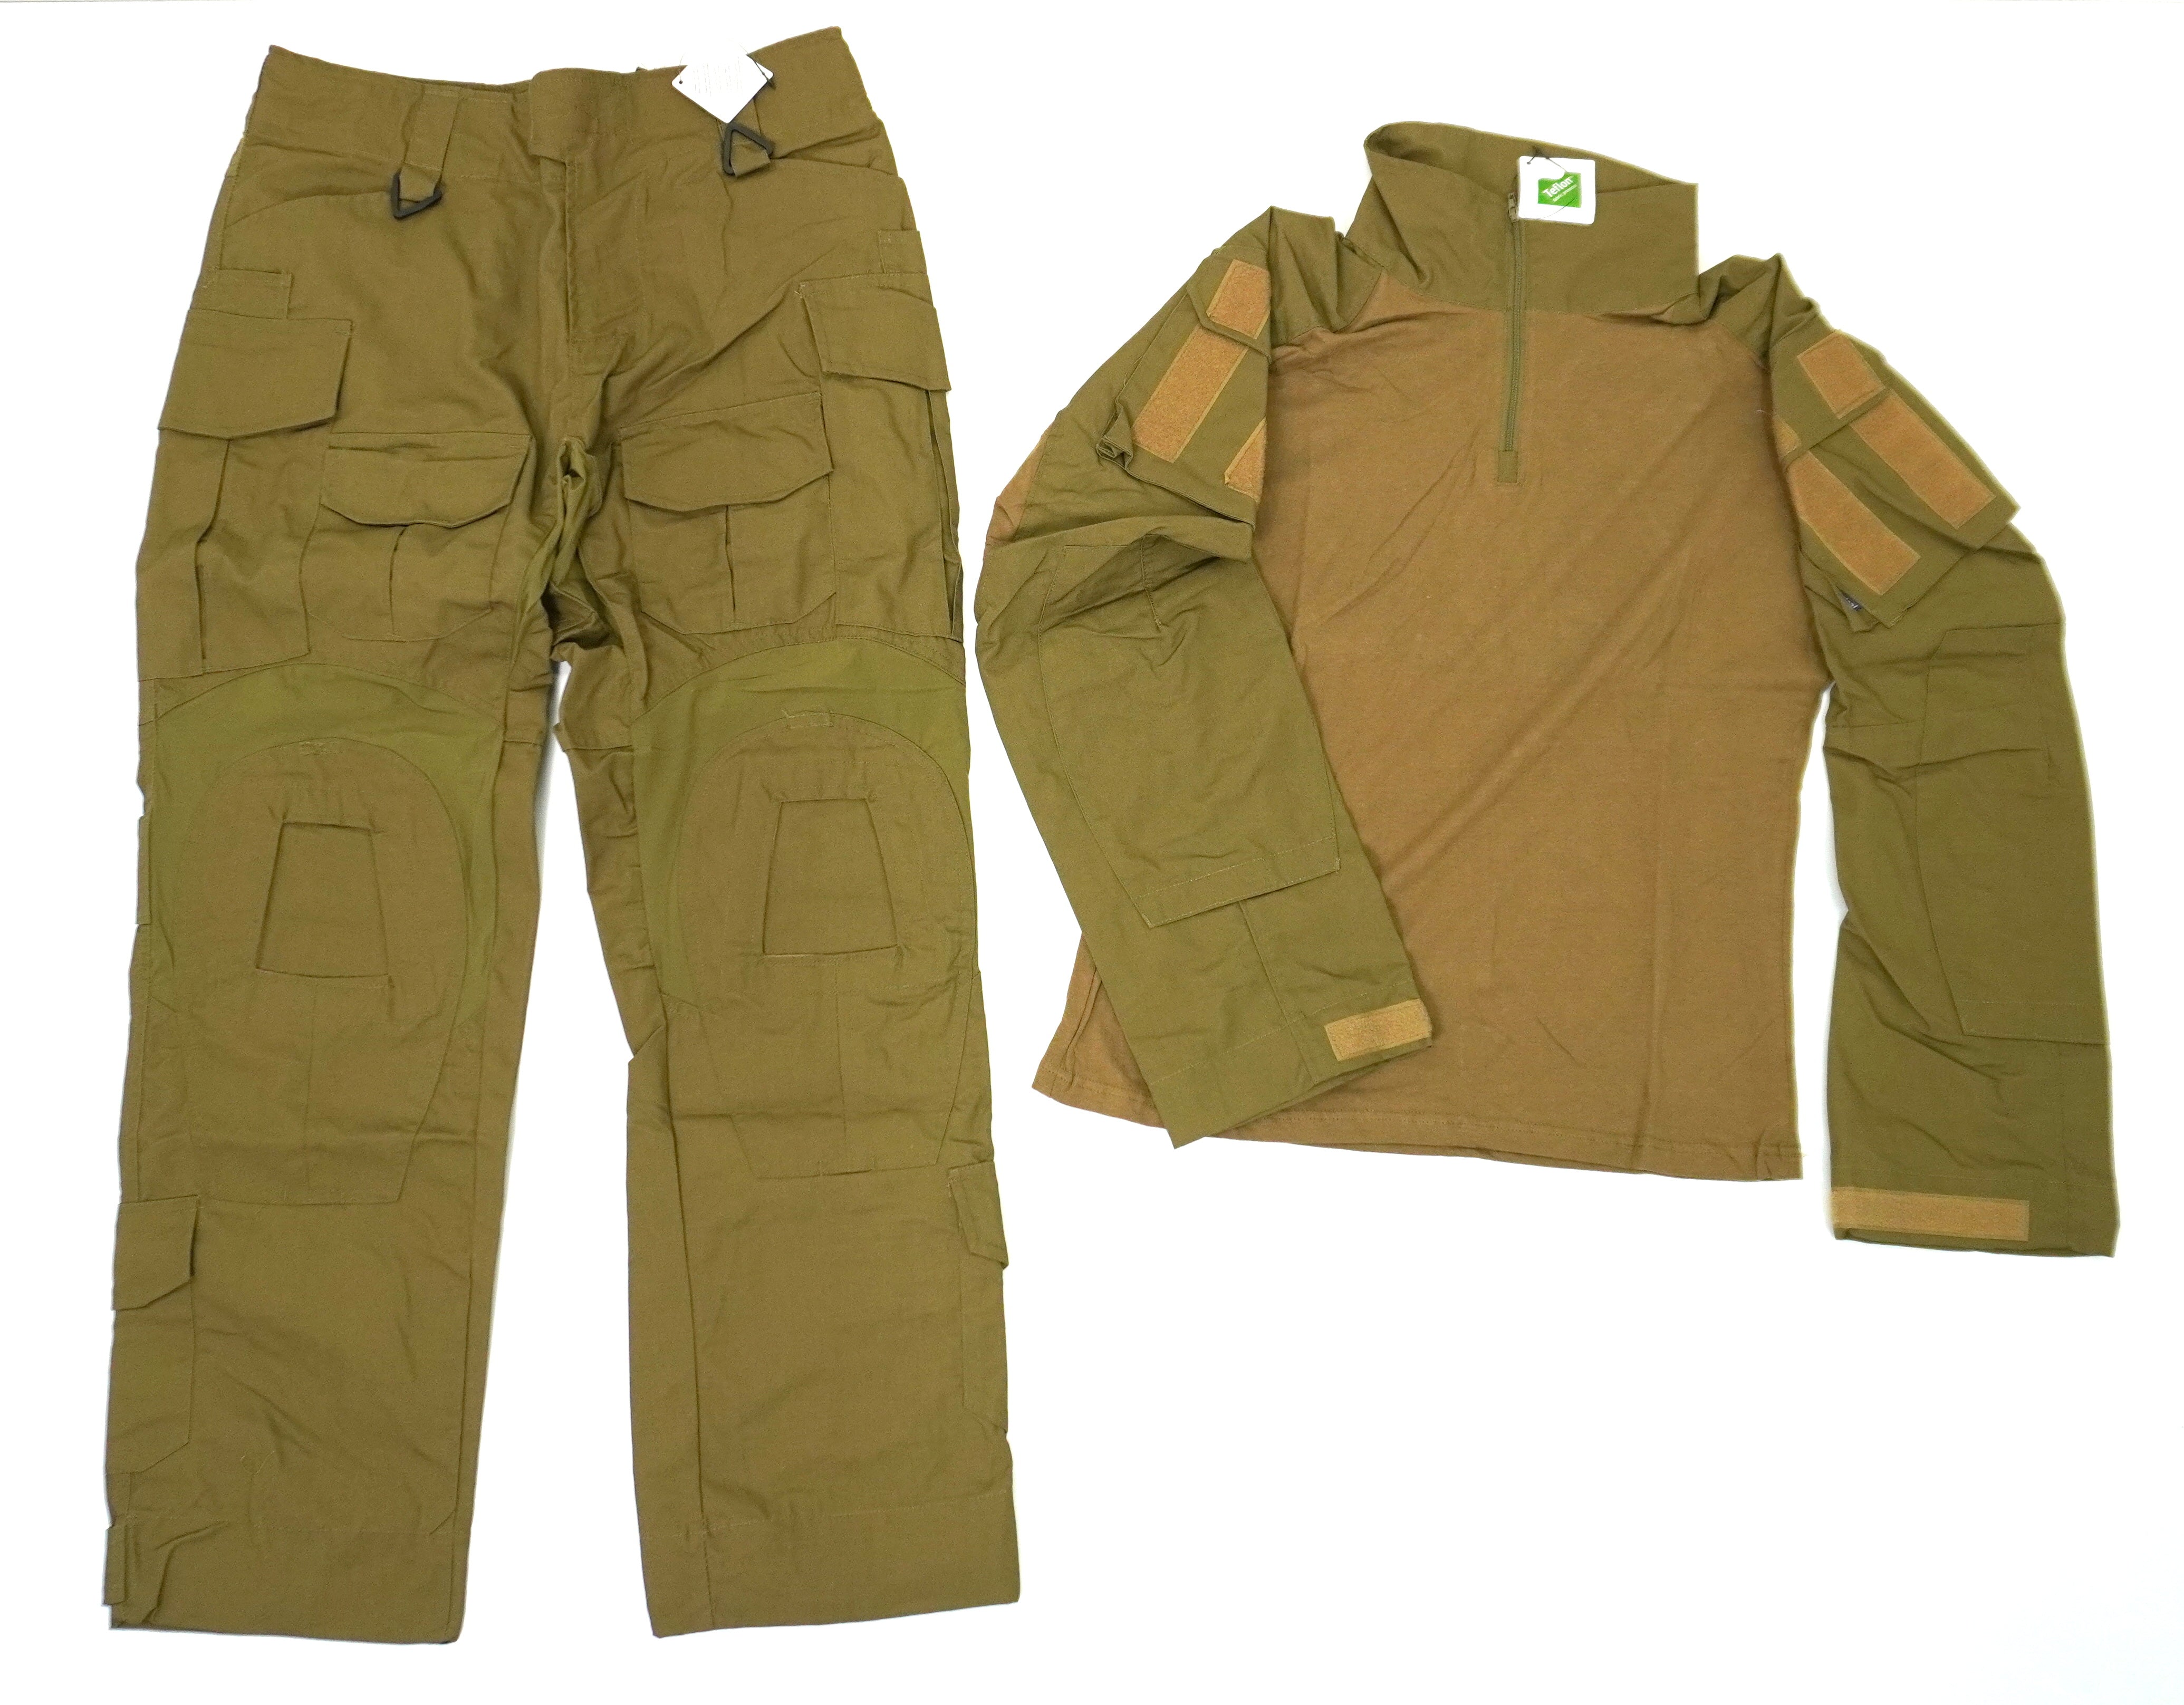 Tactical G3 Trouser & UBAC Uniform Set Coyote